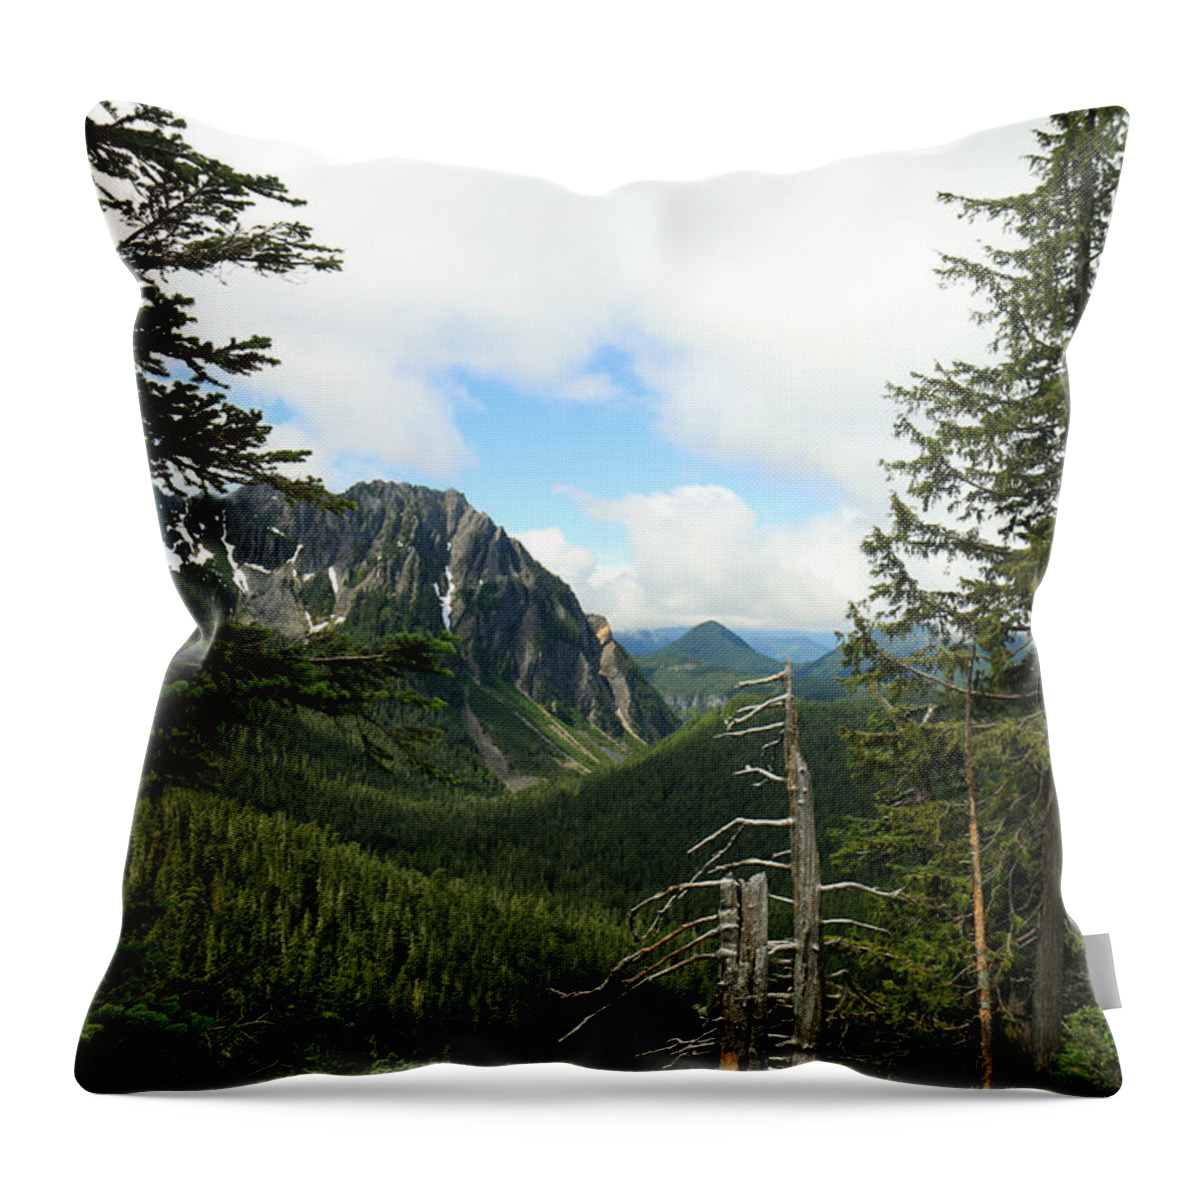 Clouds Throw Pillow featuring the photograph A Vista - Mt. Rainier National Park by E Faithe Lester